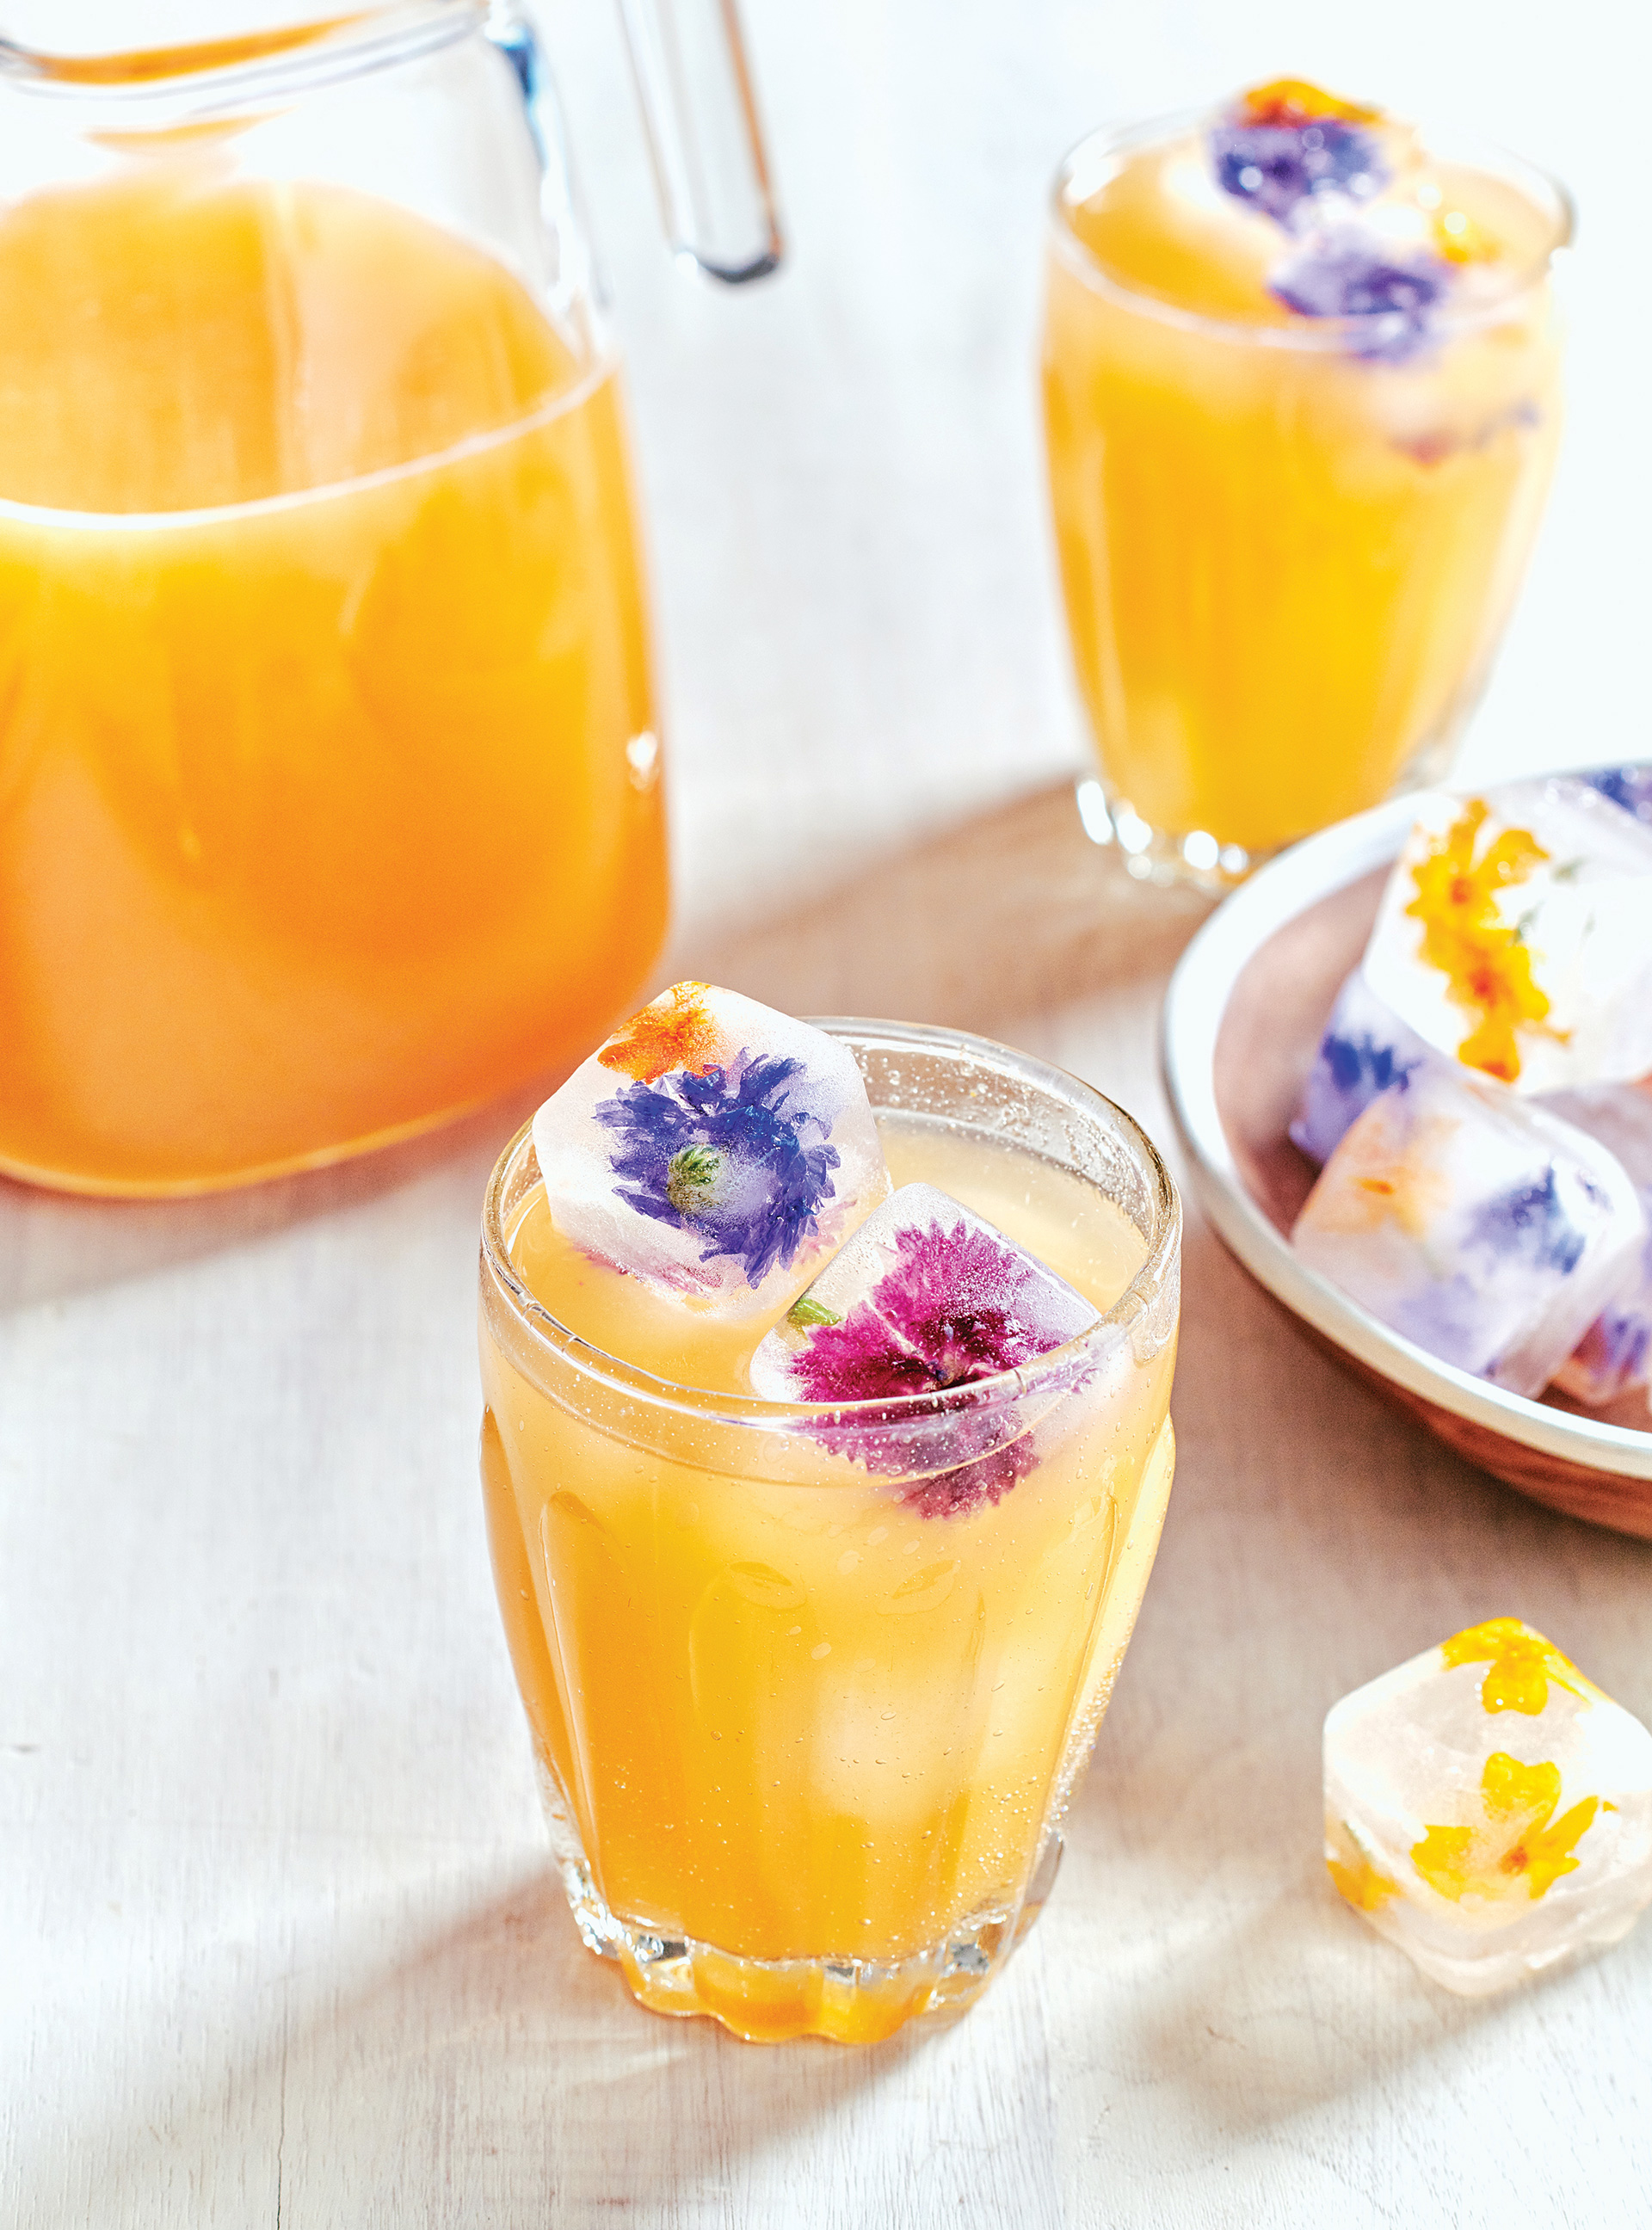 Peach and Camomile Lemonade